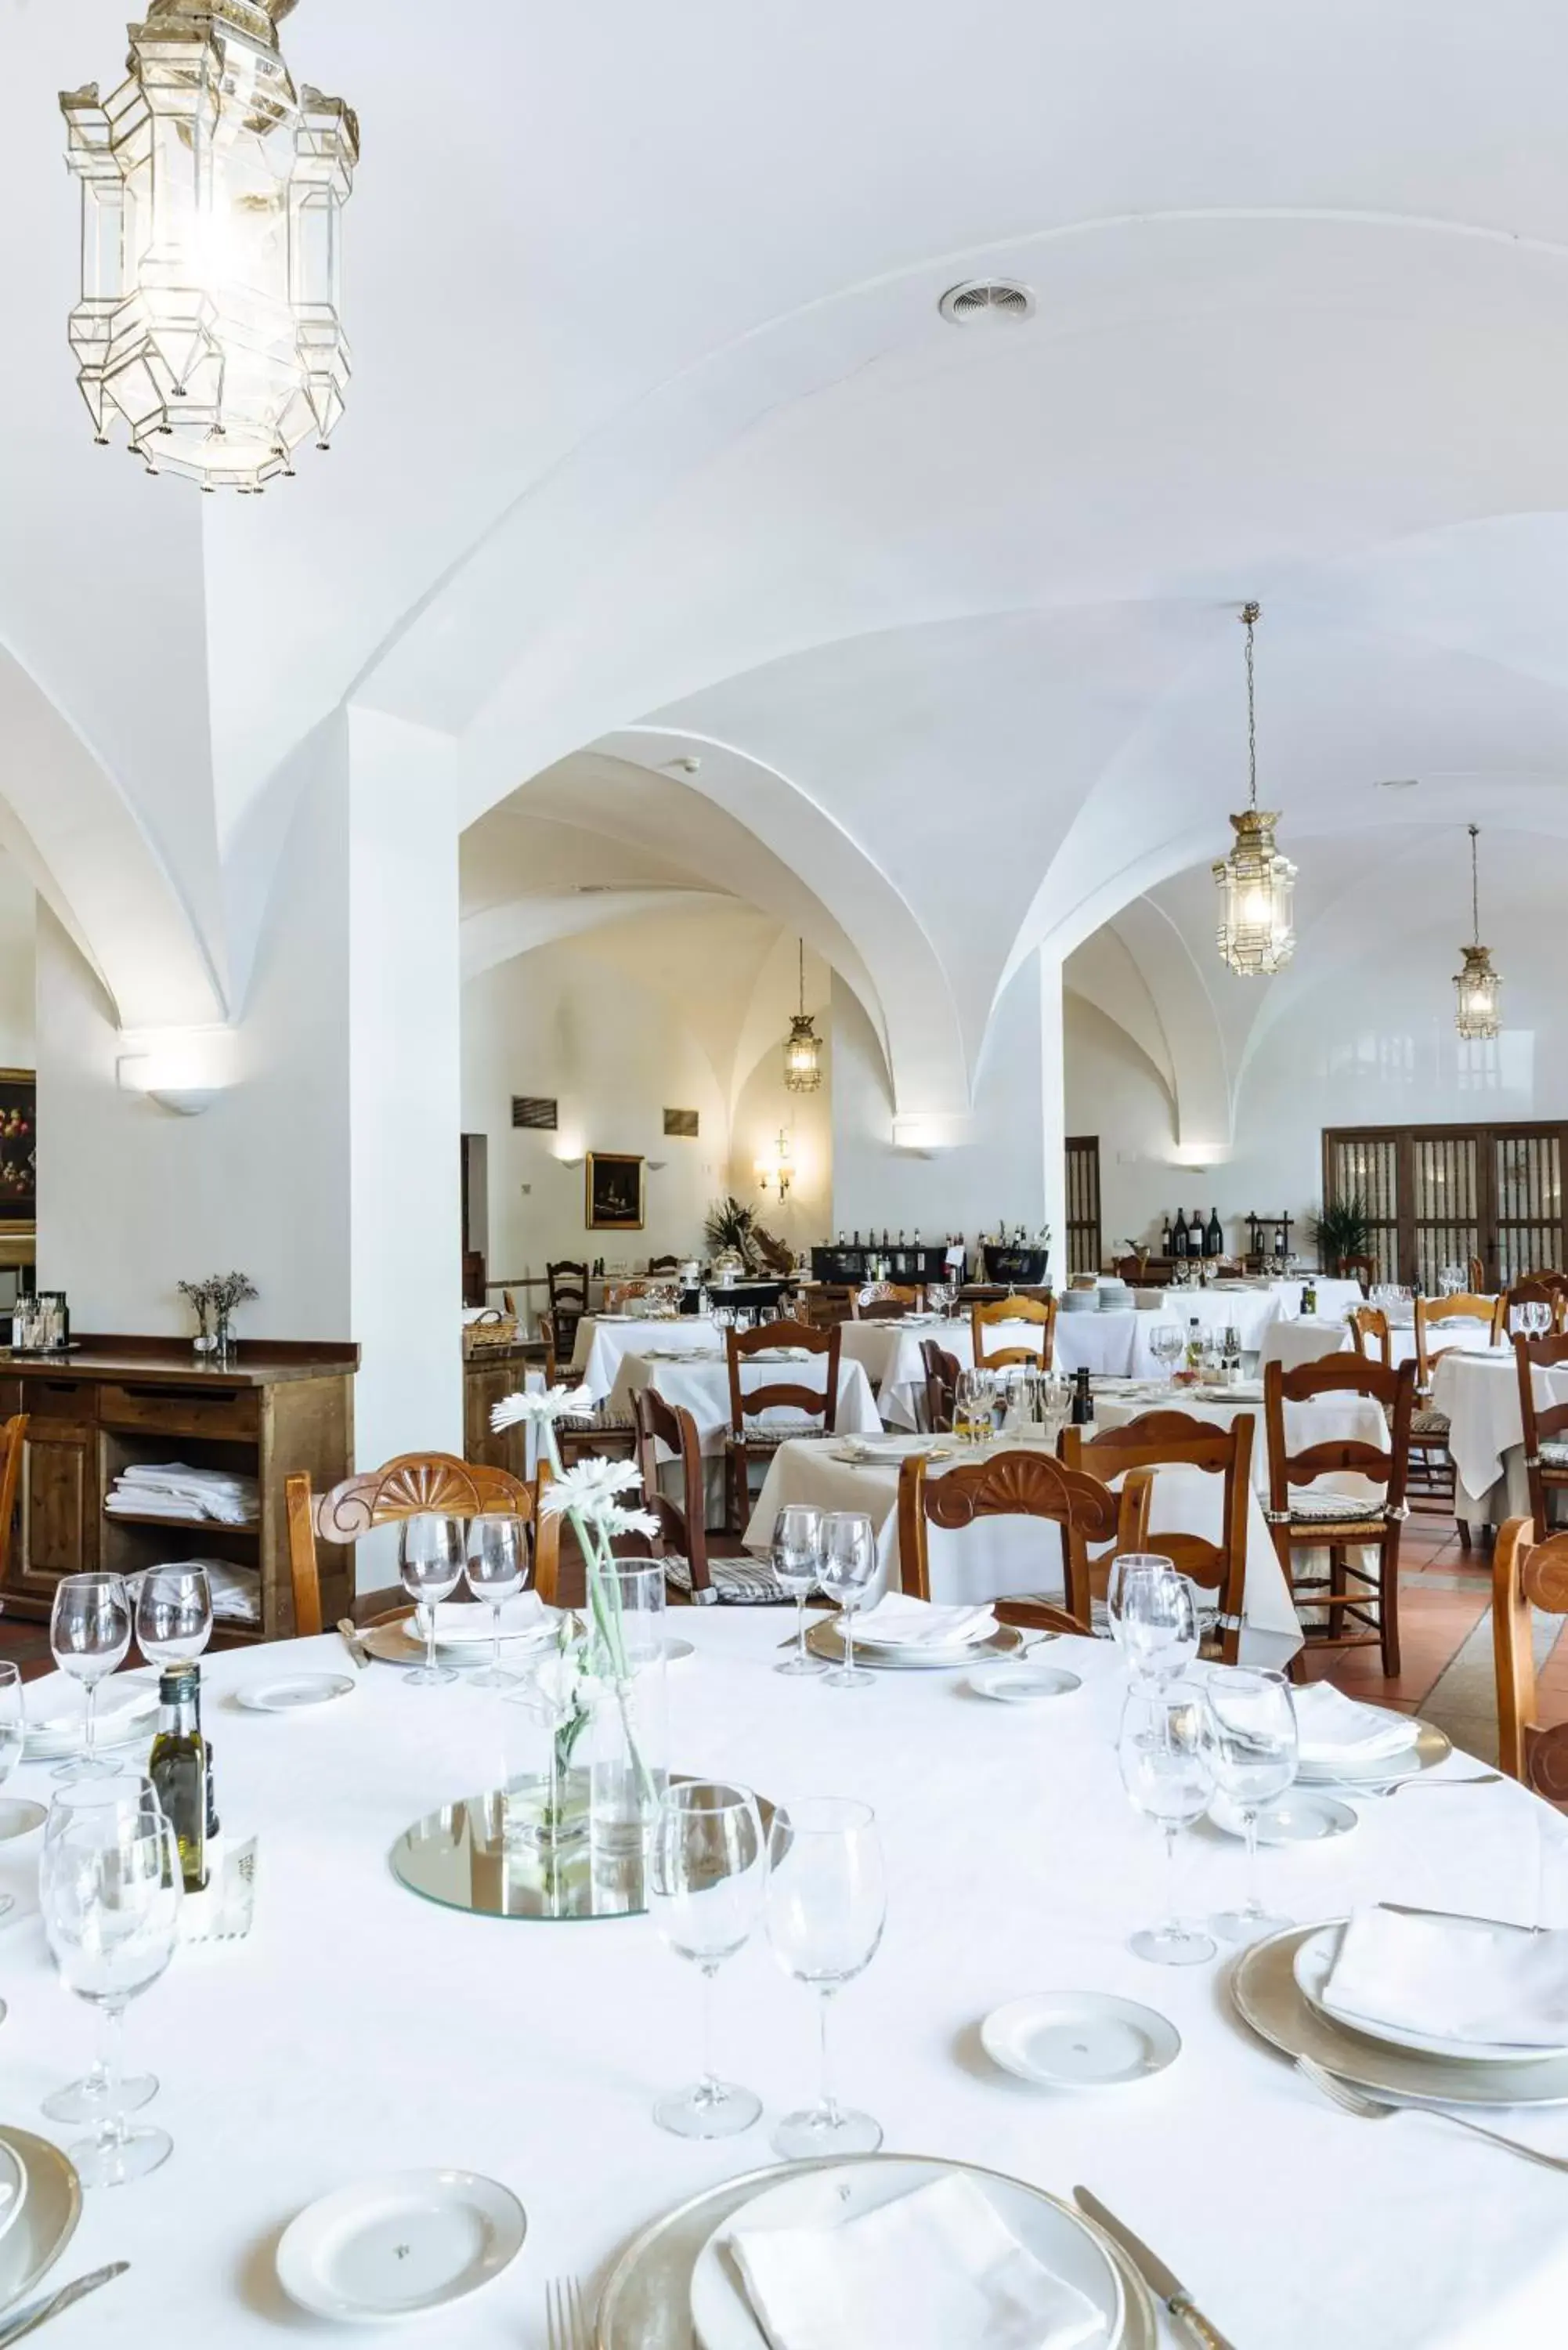 Banquet/Function facilities, Restaurant/Places to Eat in Parador de Mérida